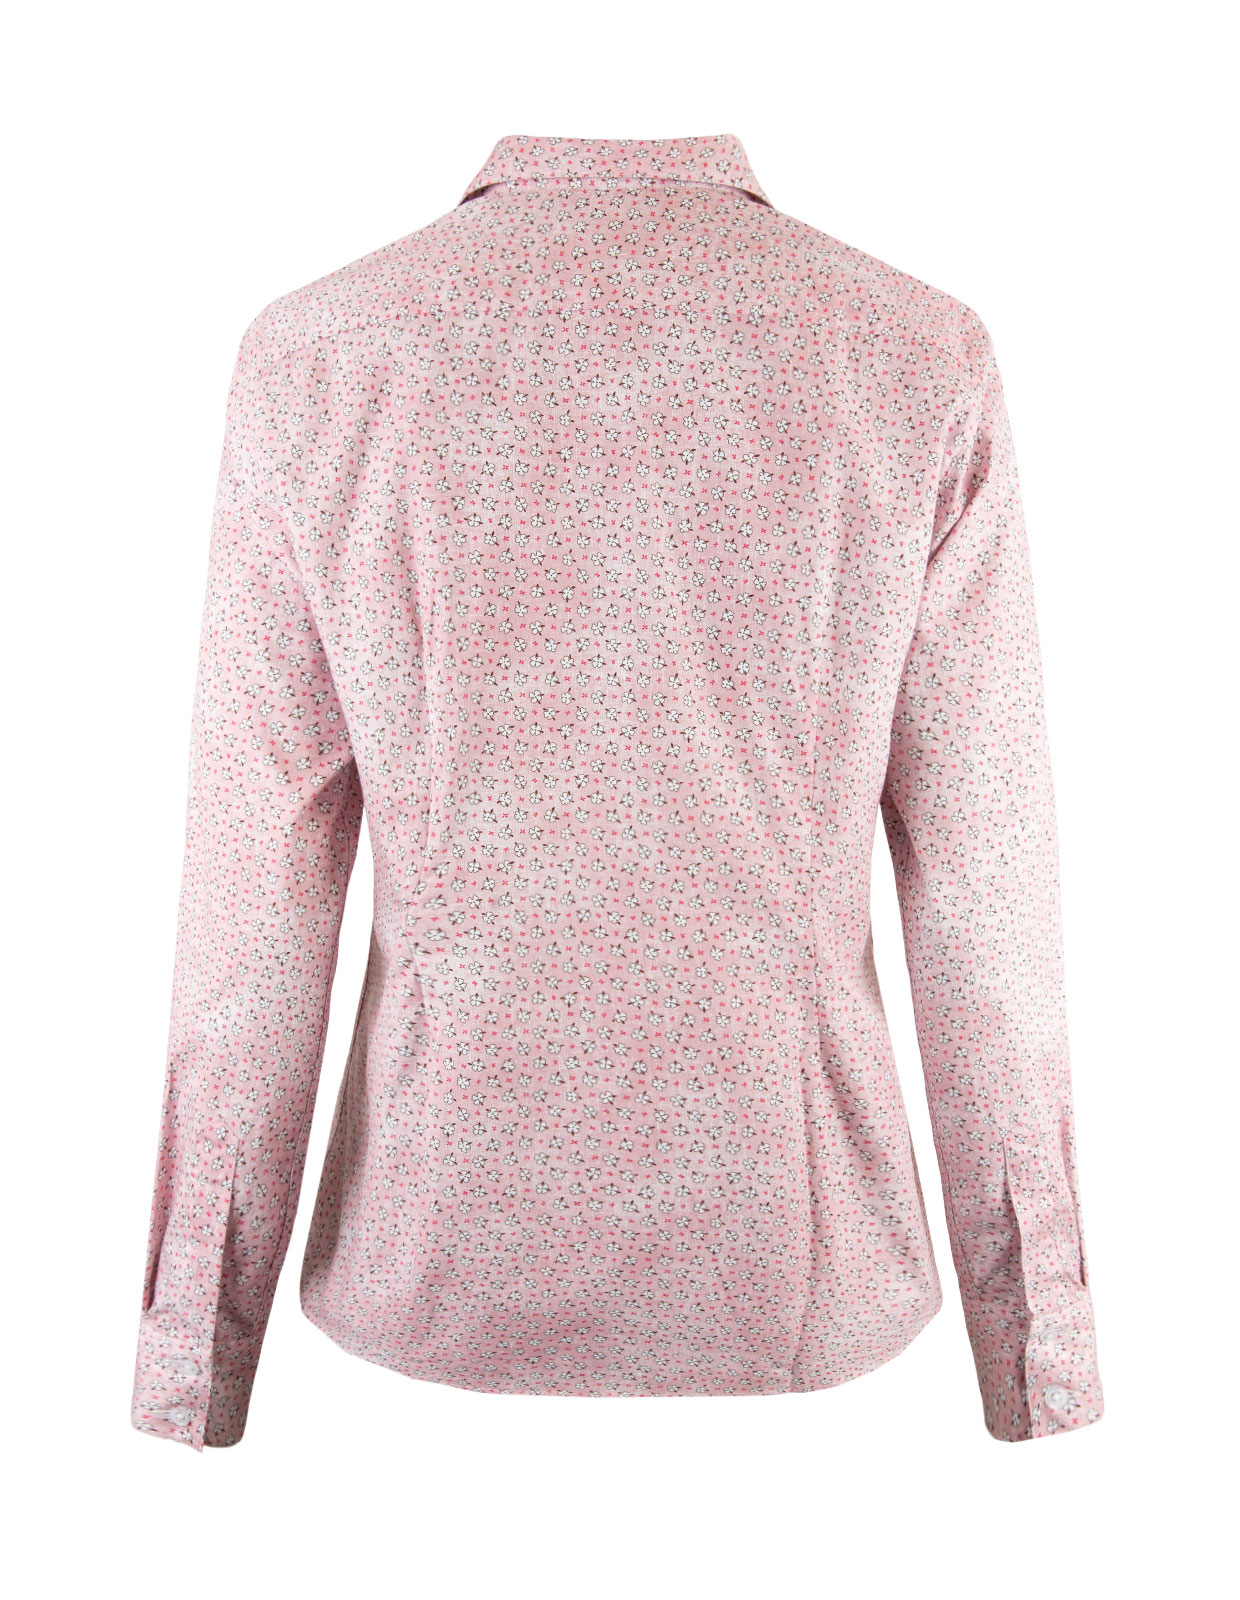 Cotton Shirt Long Sleeve Pink Flowers